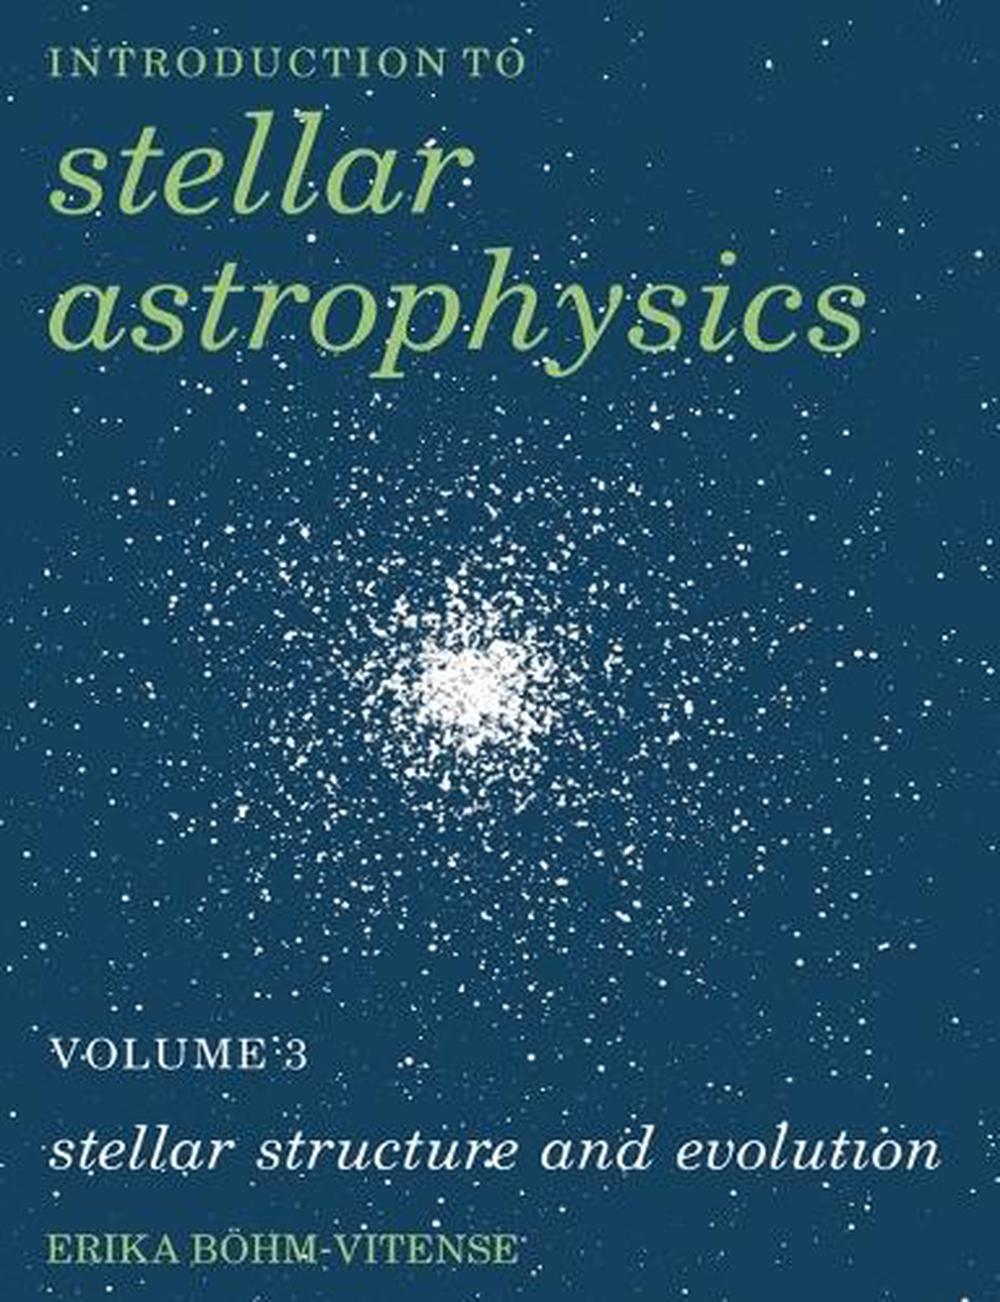 Stellar Structure and Evolution by Erika Bohm-Vitense (English ...